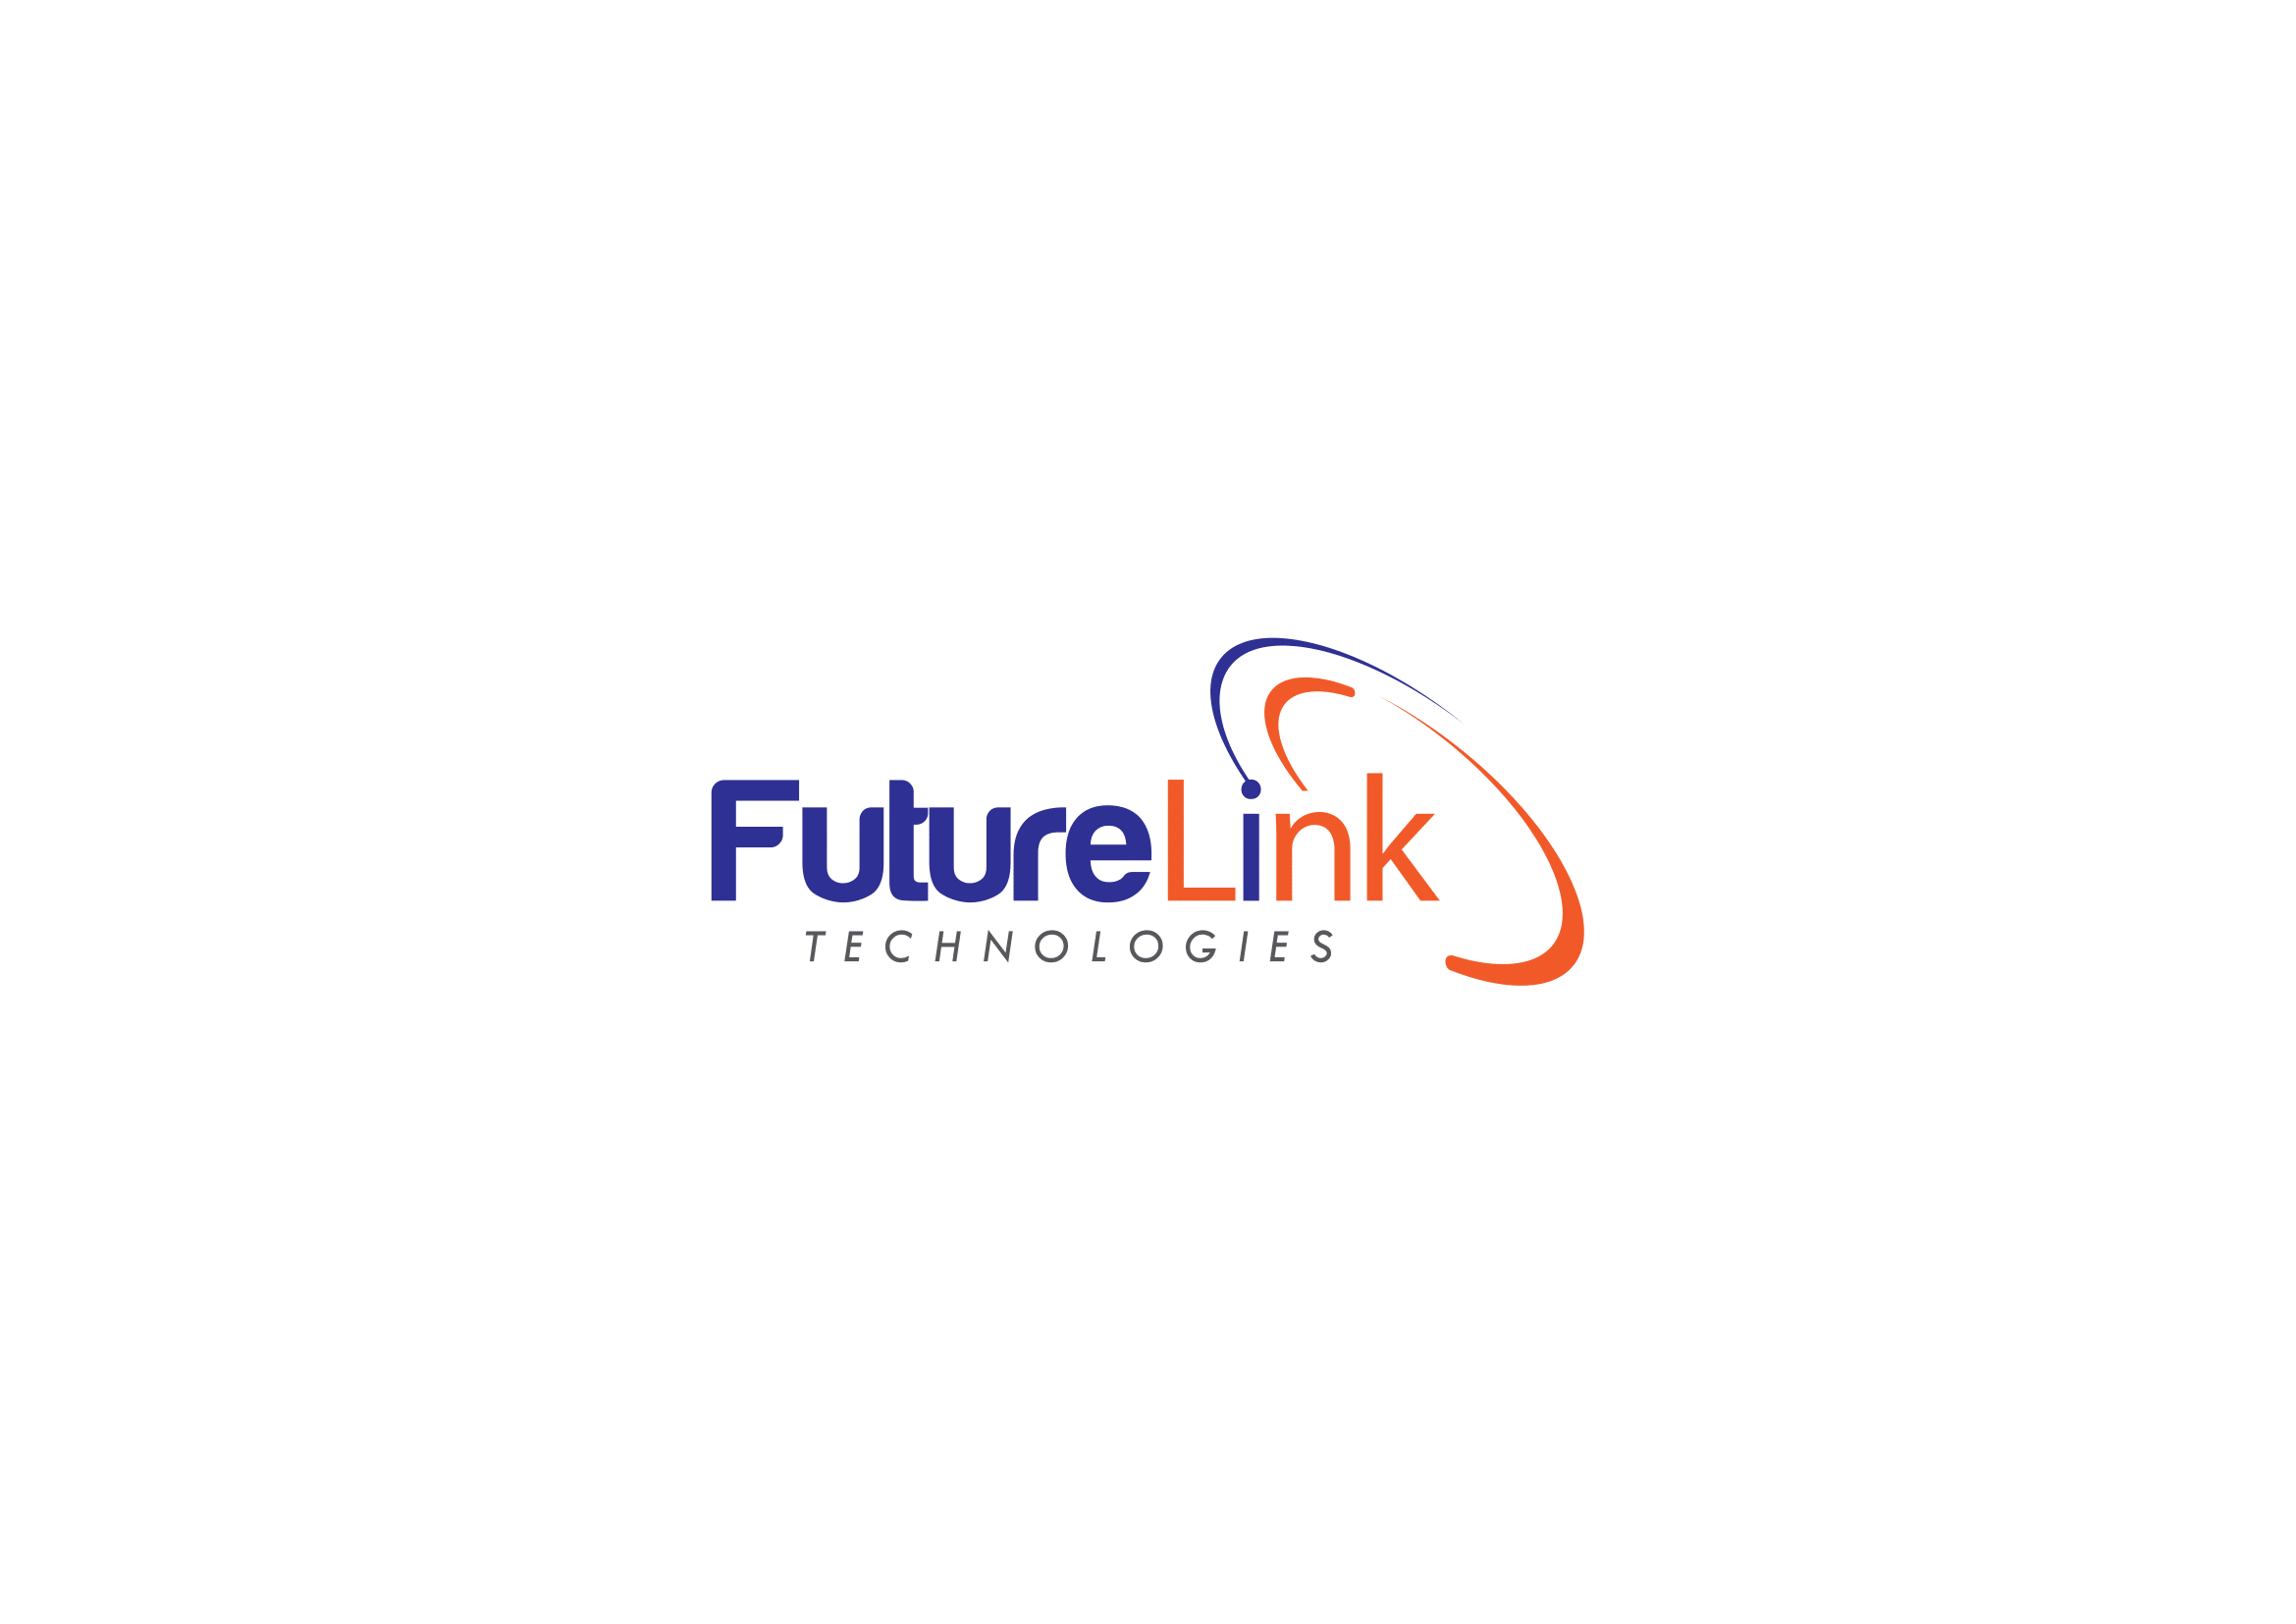 FutureLink Technologies Ltd